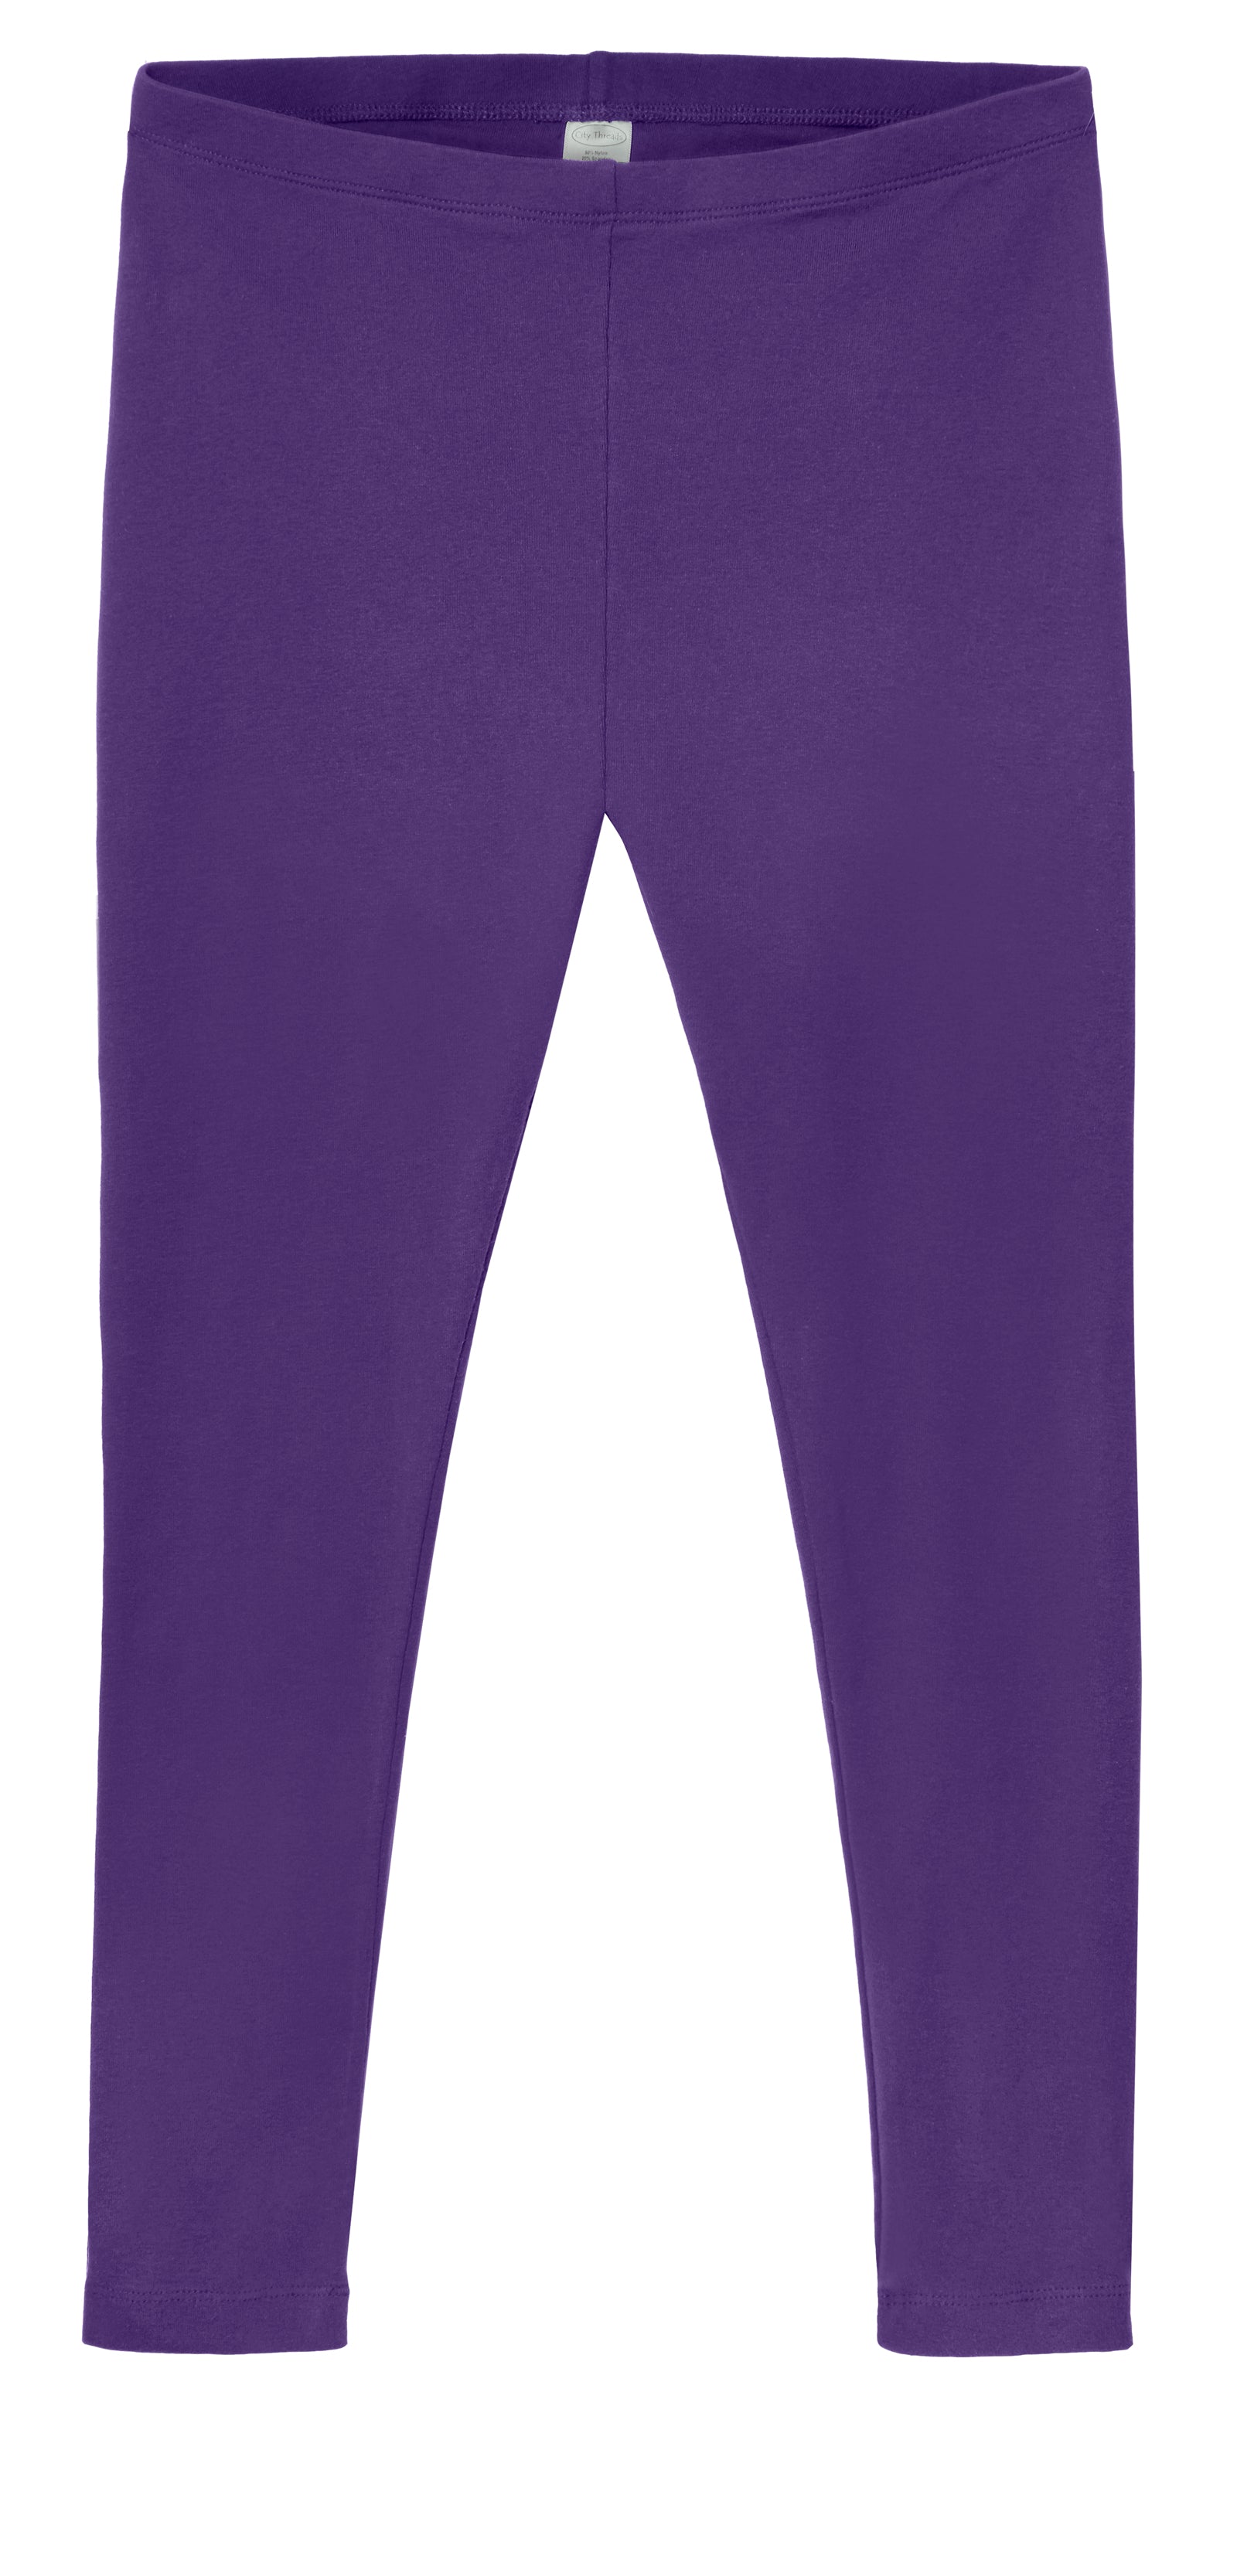 Buy J D Cotton Women's 4 Way Chudidar Leggings, Size: Free Size (Dark  Purple) at